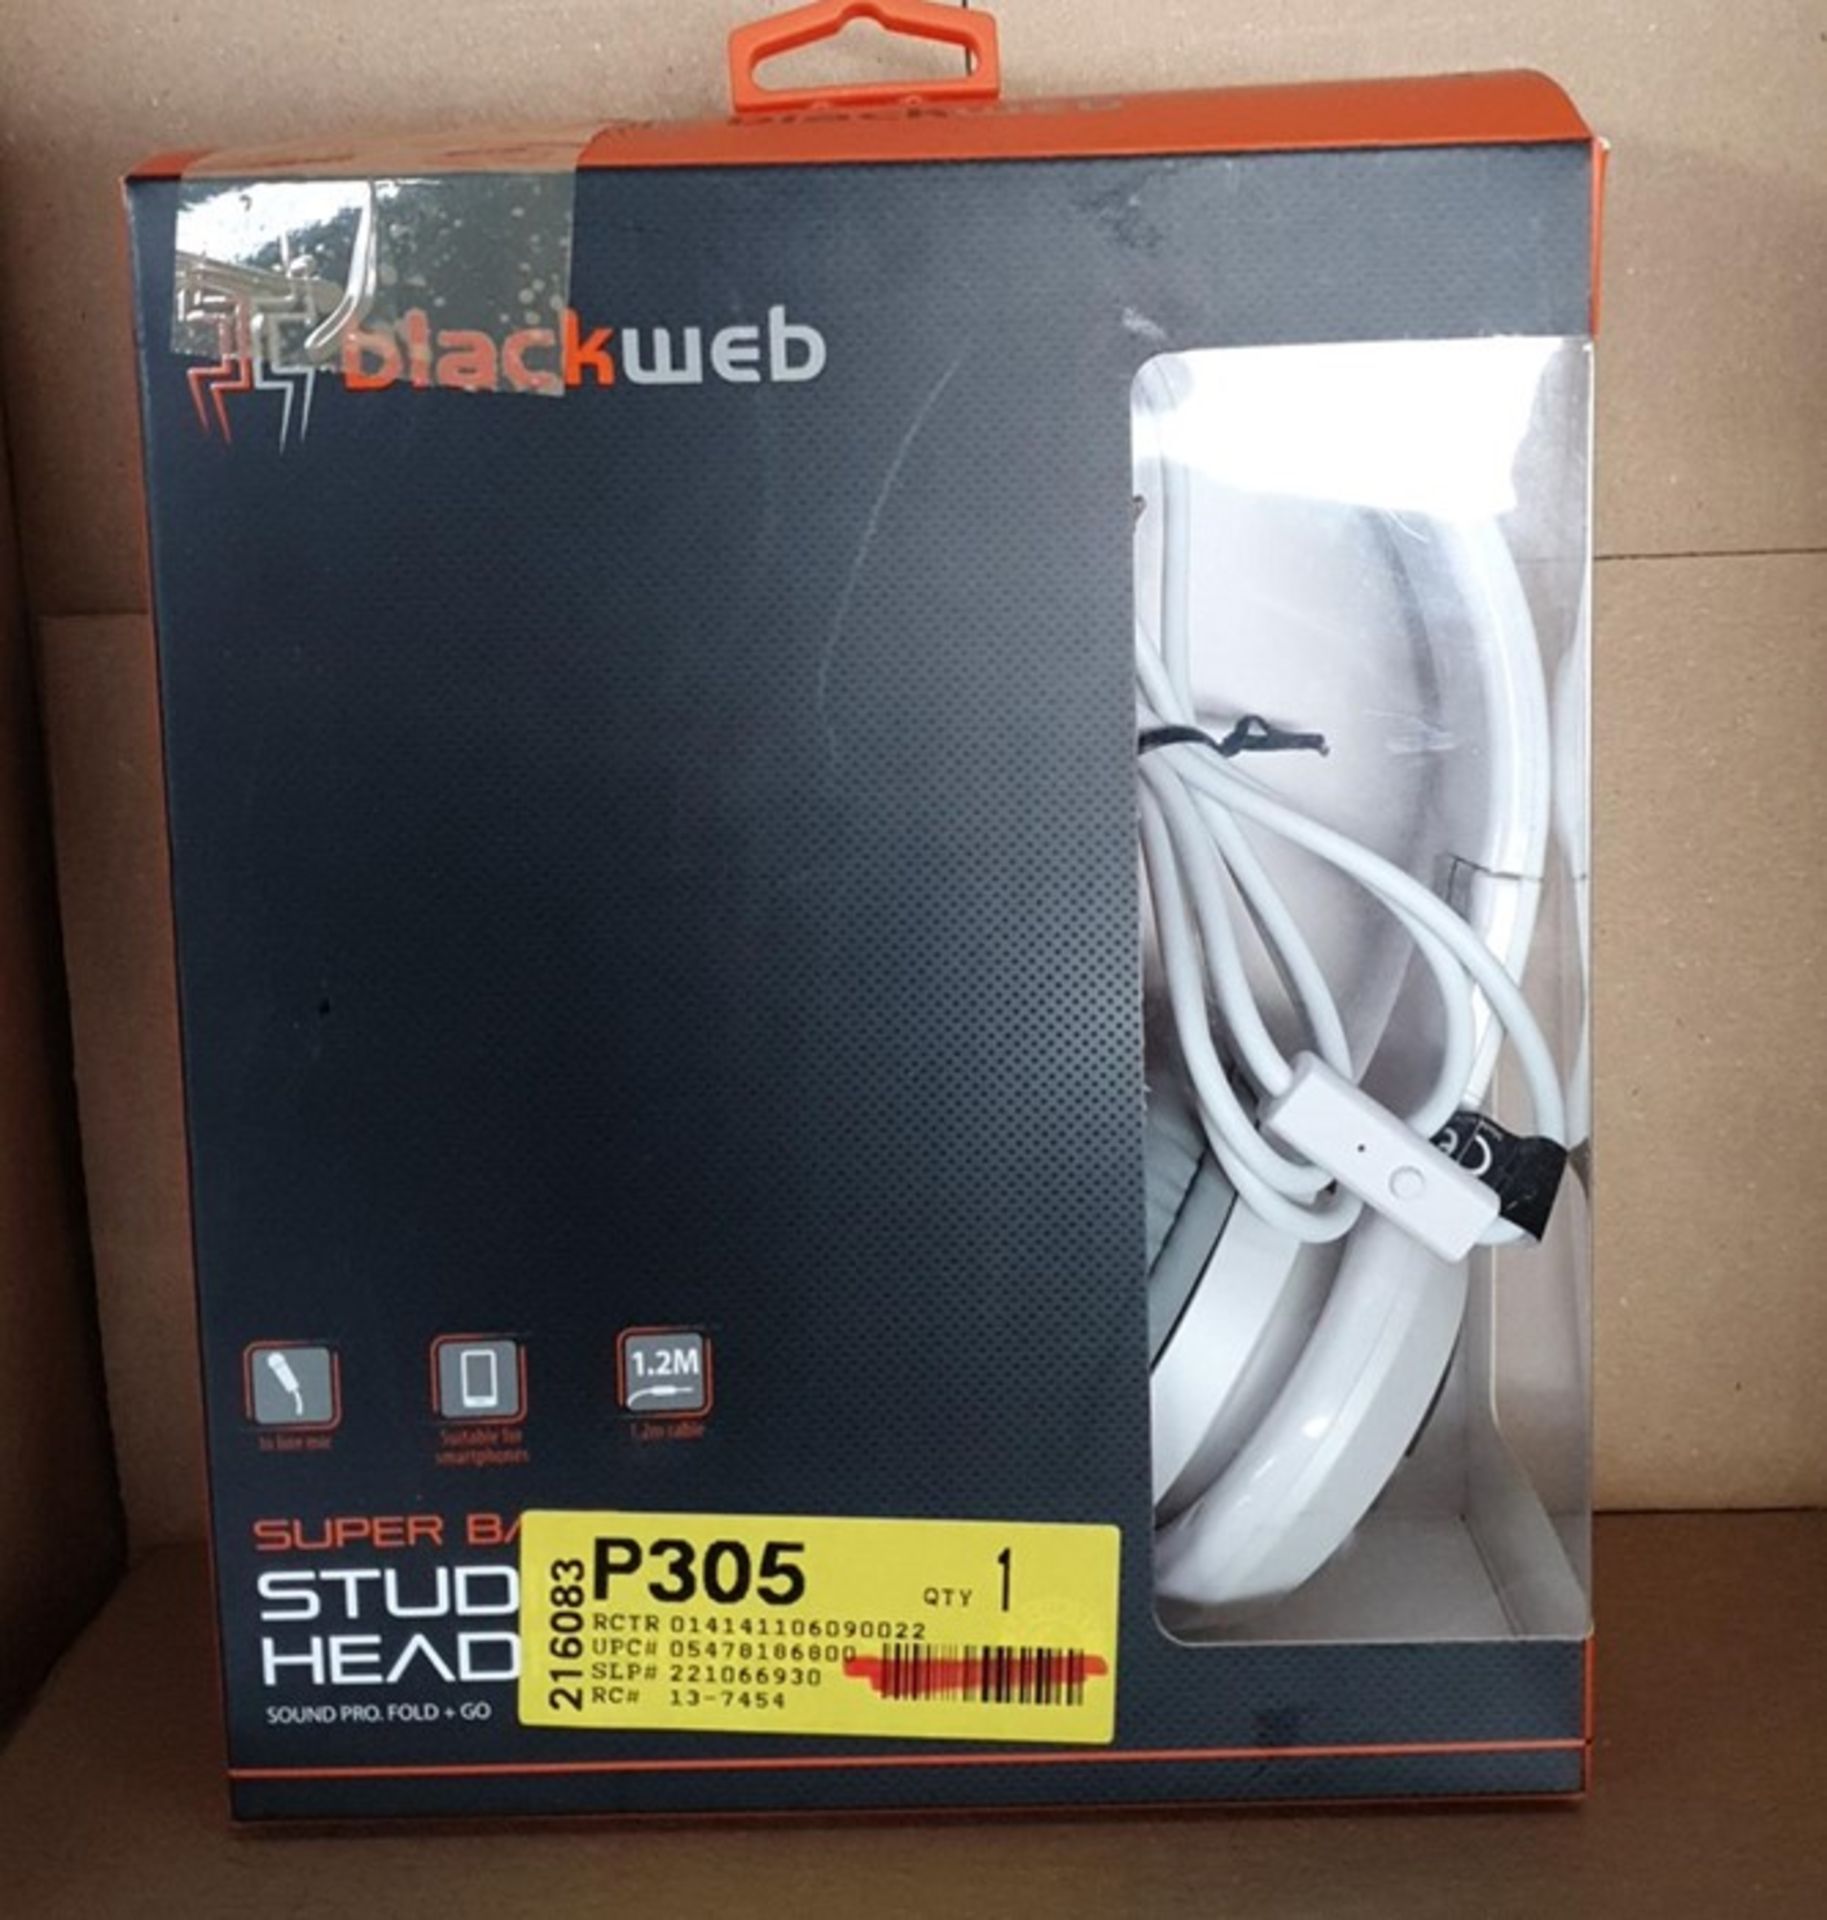 1 BOXED BLACKWEB SUPER BASS STUDIO HEADPHONES - WHITE / BL - 6083 / RRP £25.00 (VIEWING HIGHLY